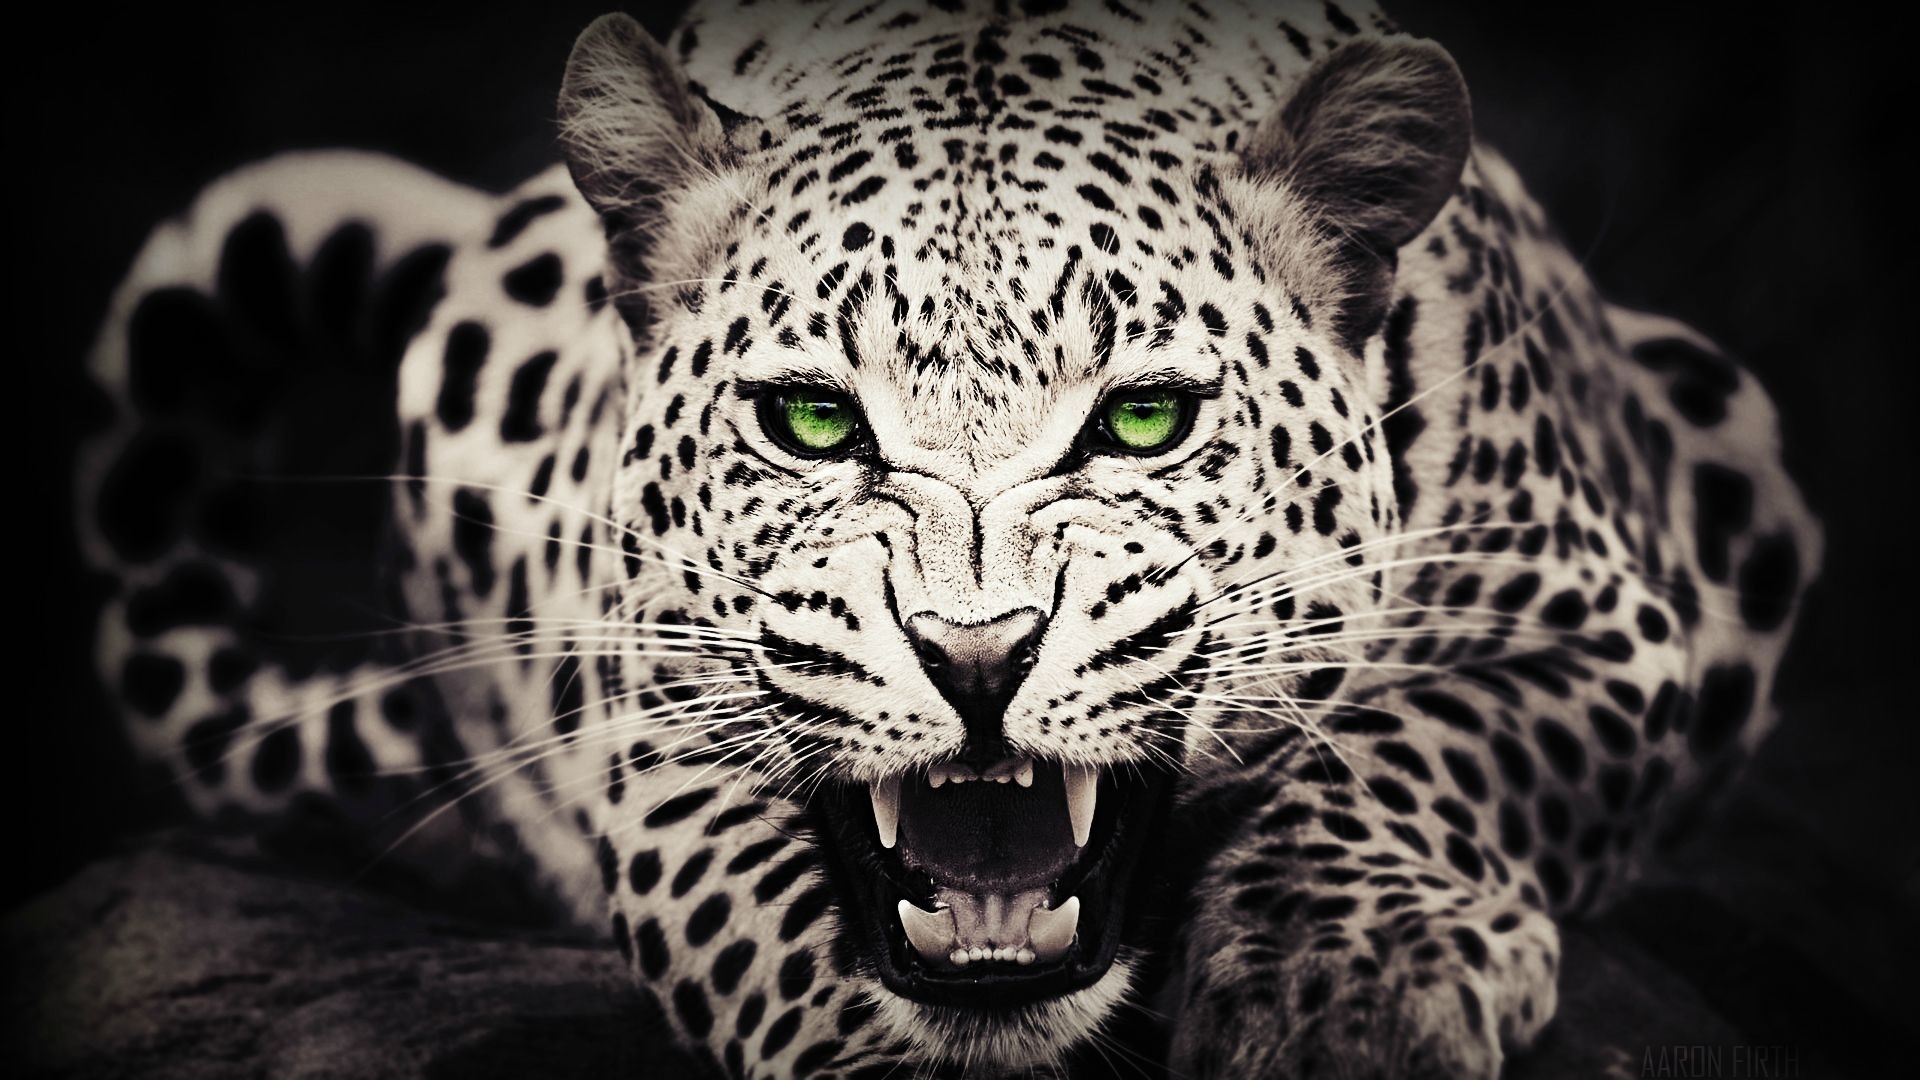 General 1920x1080 animals green eyes leopard selective coloring photoshopped teeth cats big cats mammals closeup fangs